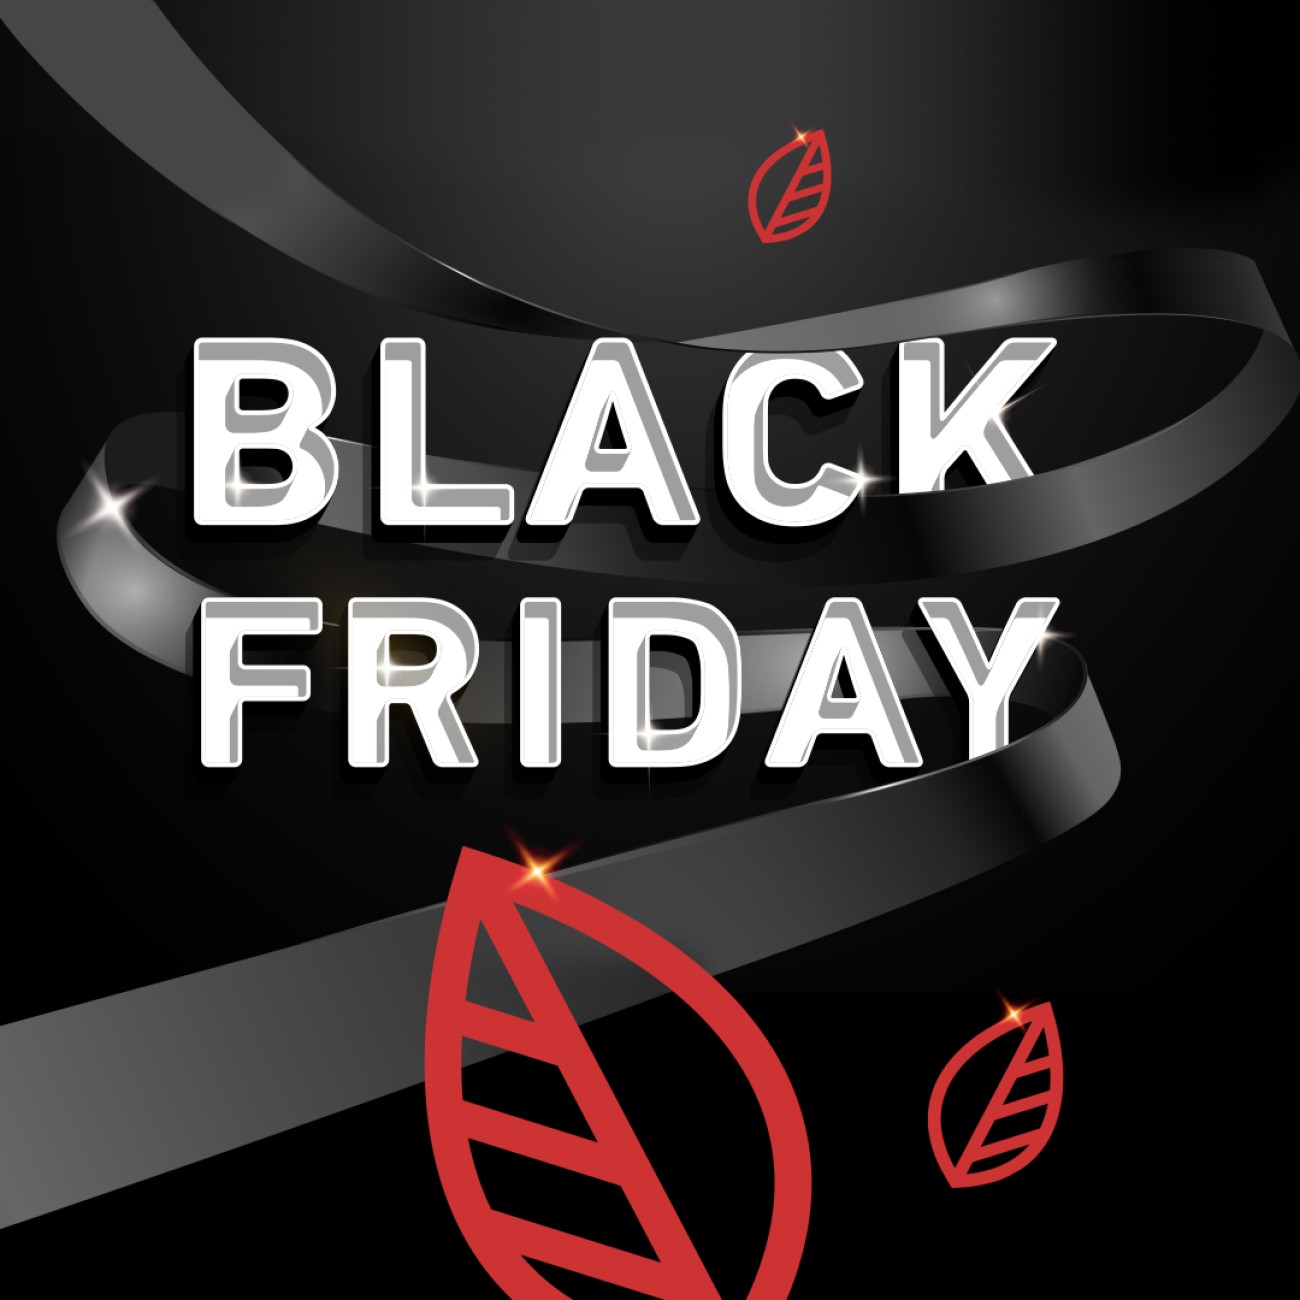 Black Friday τιμές έως -70% σε 30 αγαπημένα σας Brands!